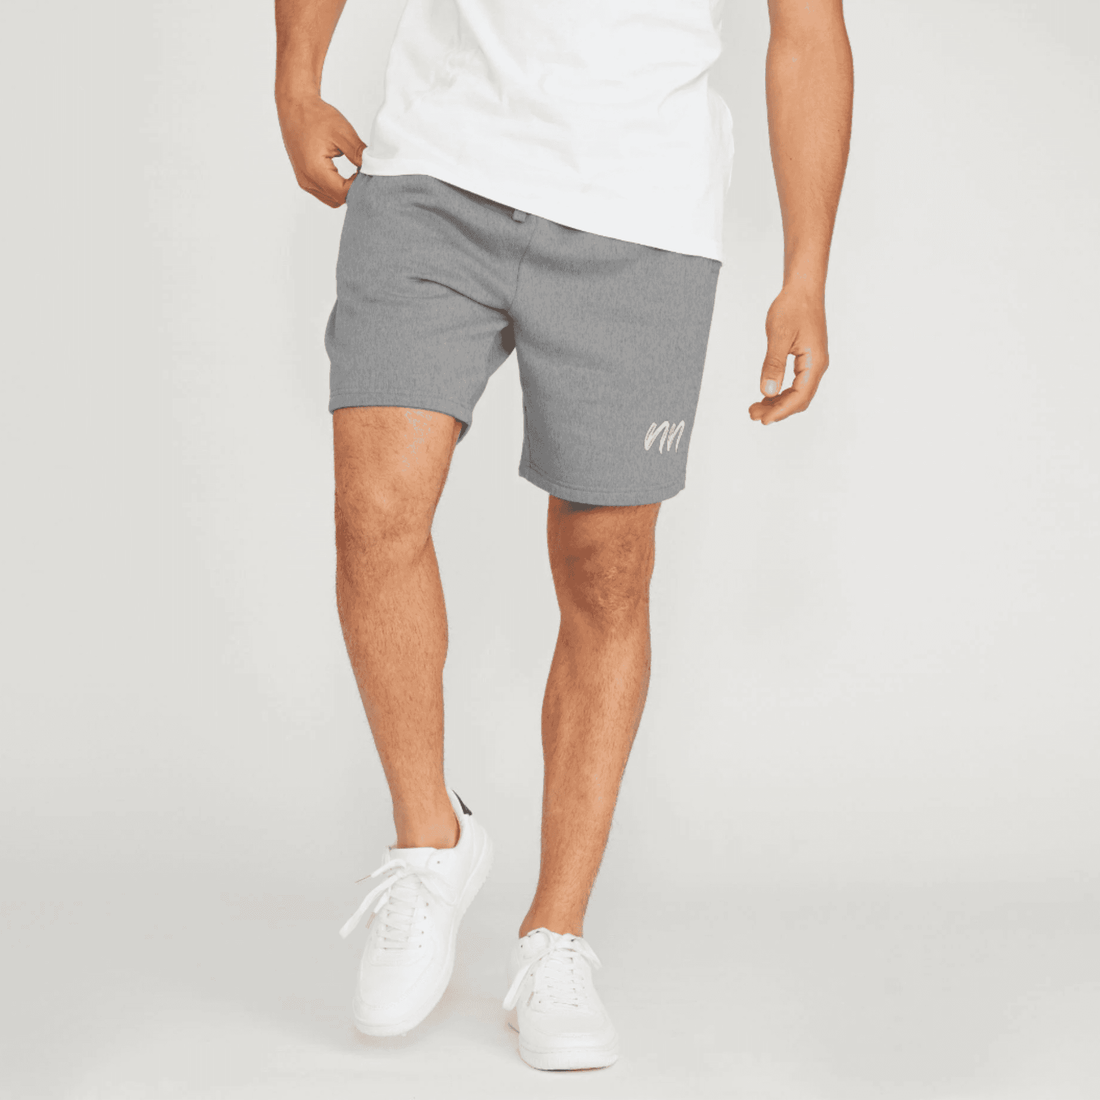 Super Soft Men's Certified Organic Cotton Shorts